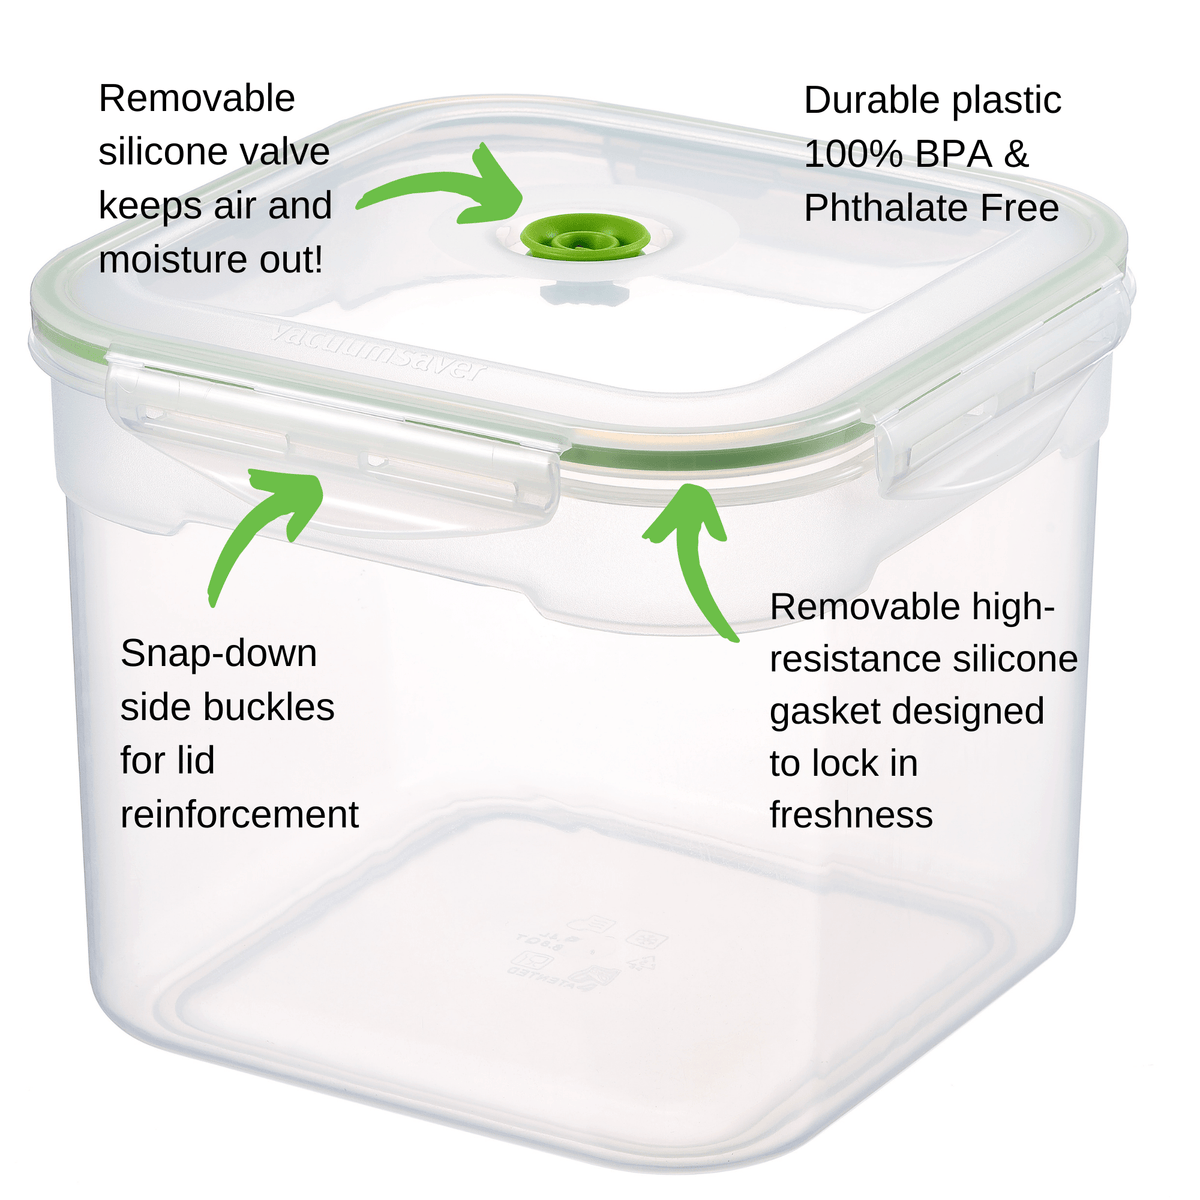 11 pc Vacuum Seal Food Storage Container Set | Hand Held Vacuum Food System | Deep Freezer Food Storage Sealer | Quick Seal Marinator | Square | Green Color - Lasting Freshness